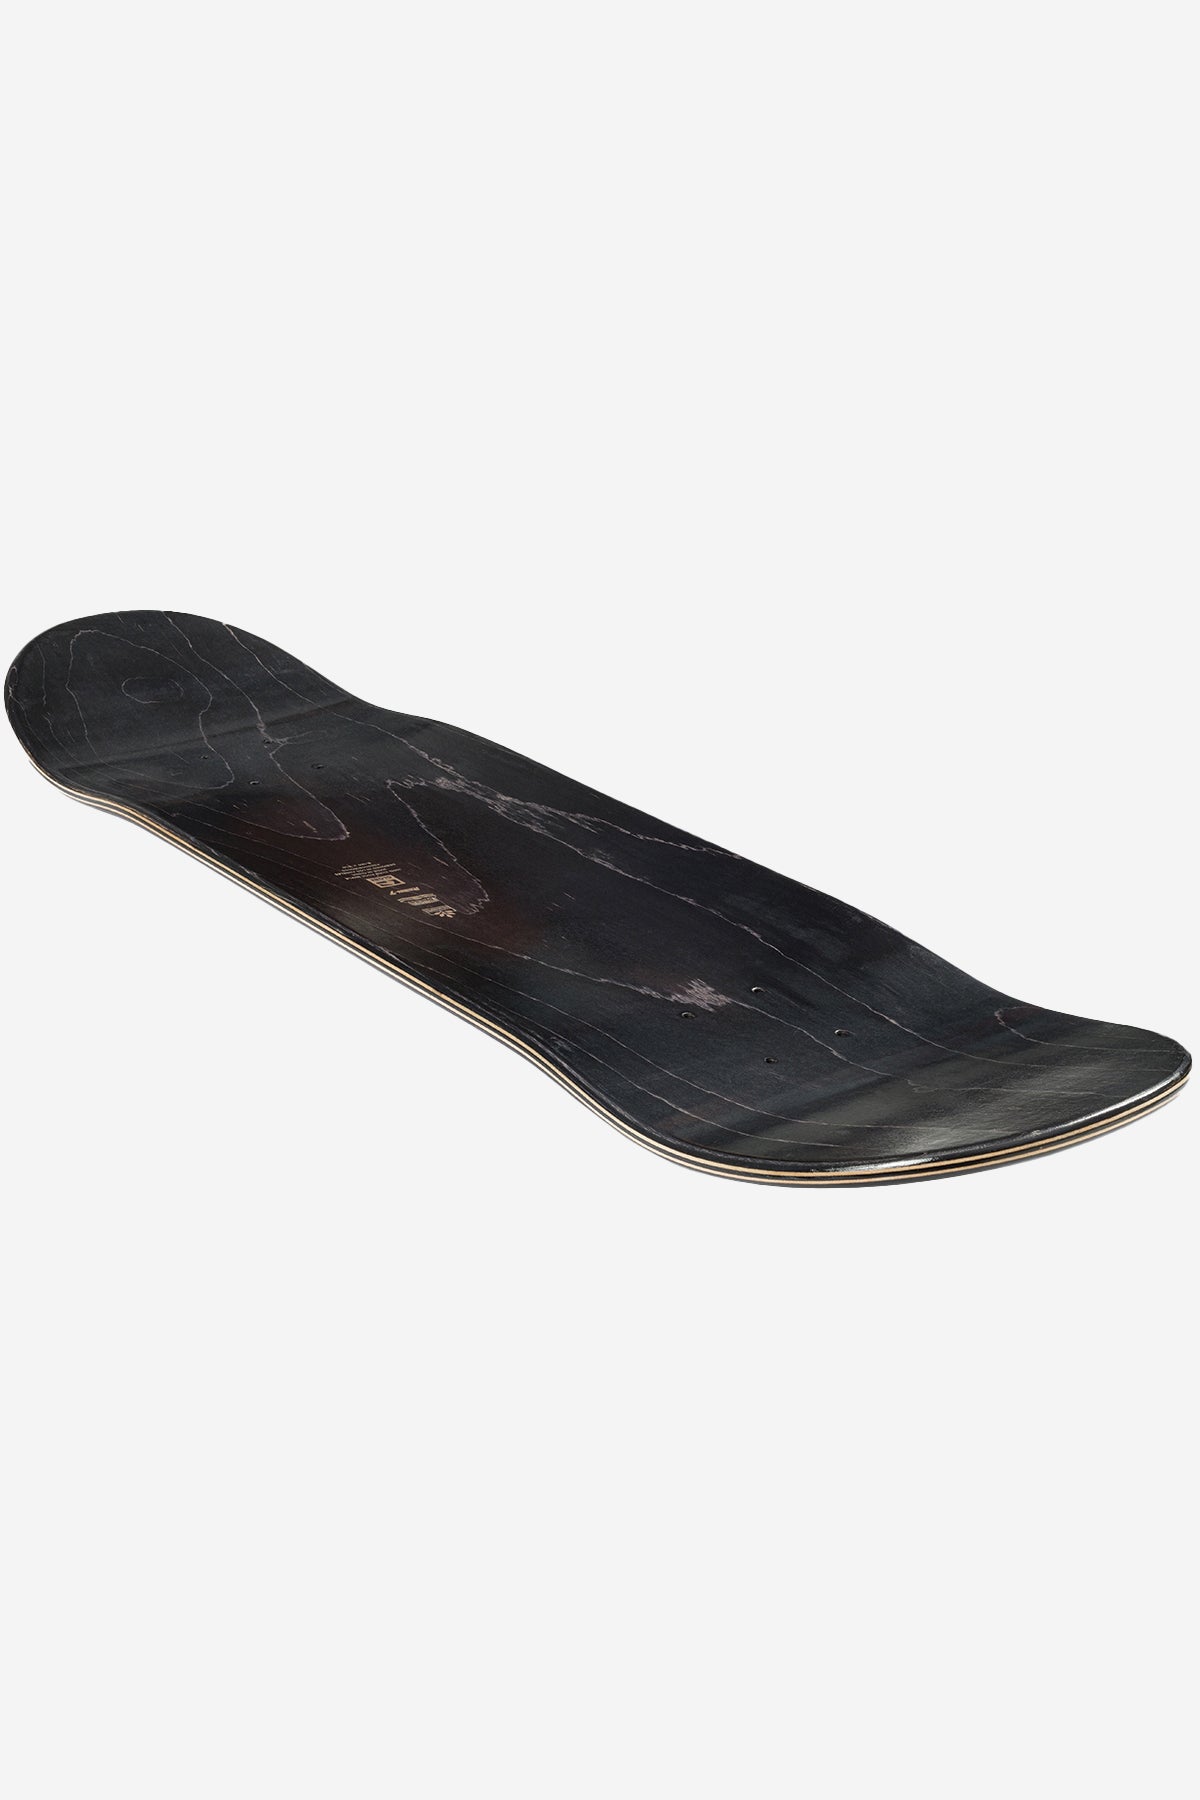 Globe - G1 Argo - Negro Camo - 8.125" Skateboard Deck